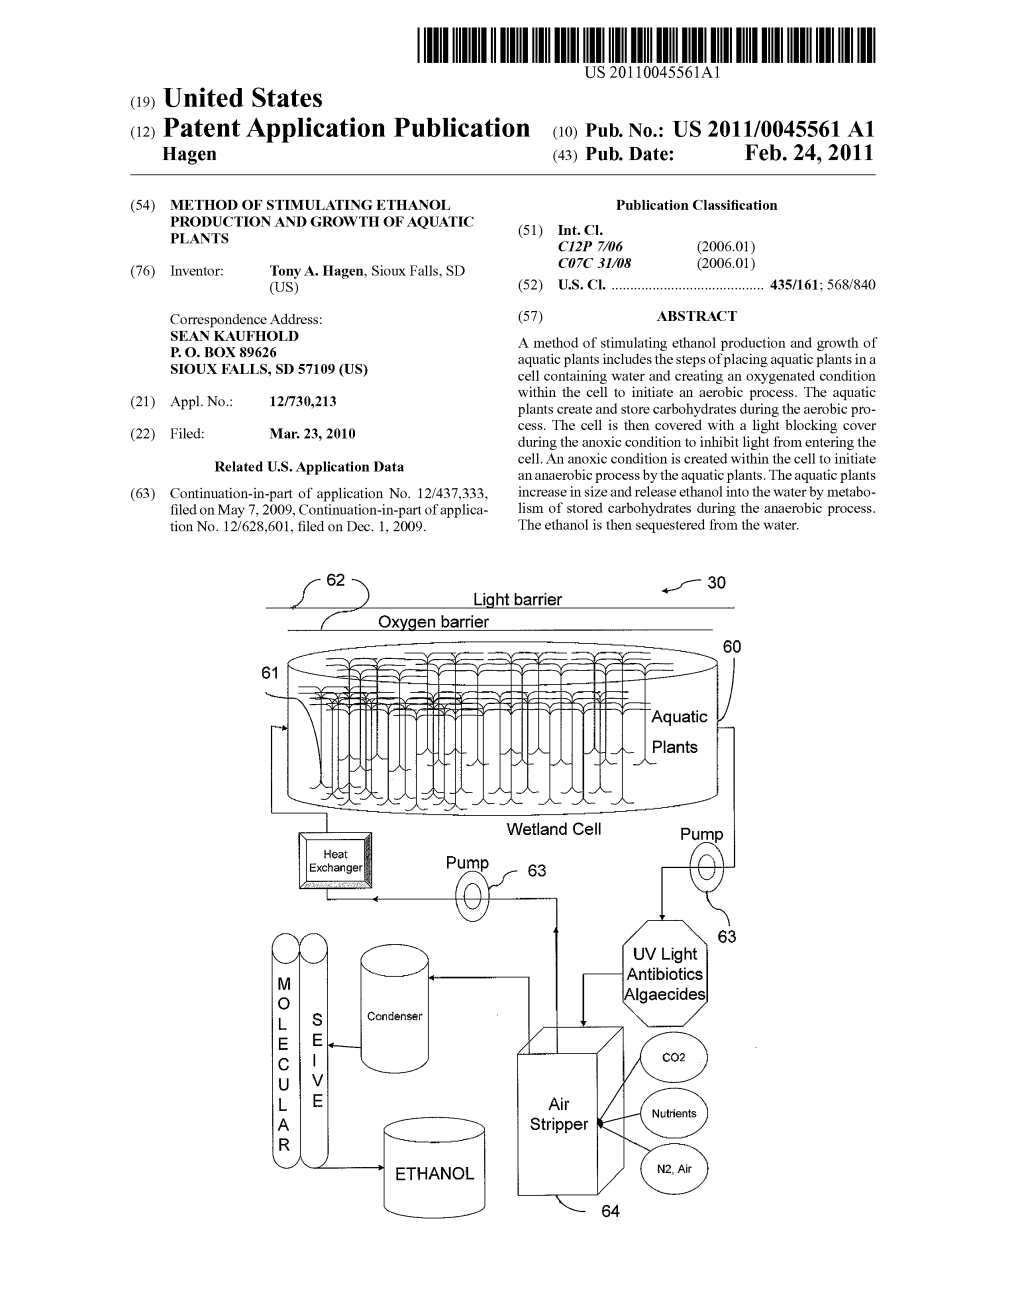 (12) Patent Application Publication (10) Pub. No.: US 2011/0045561 A1 Hagen (43) Pub